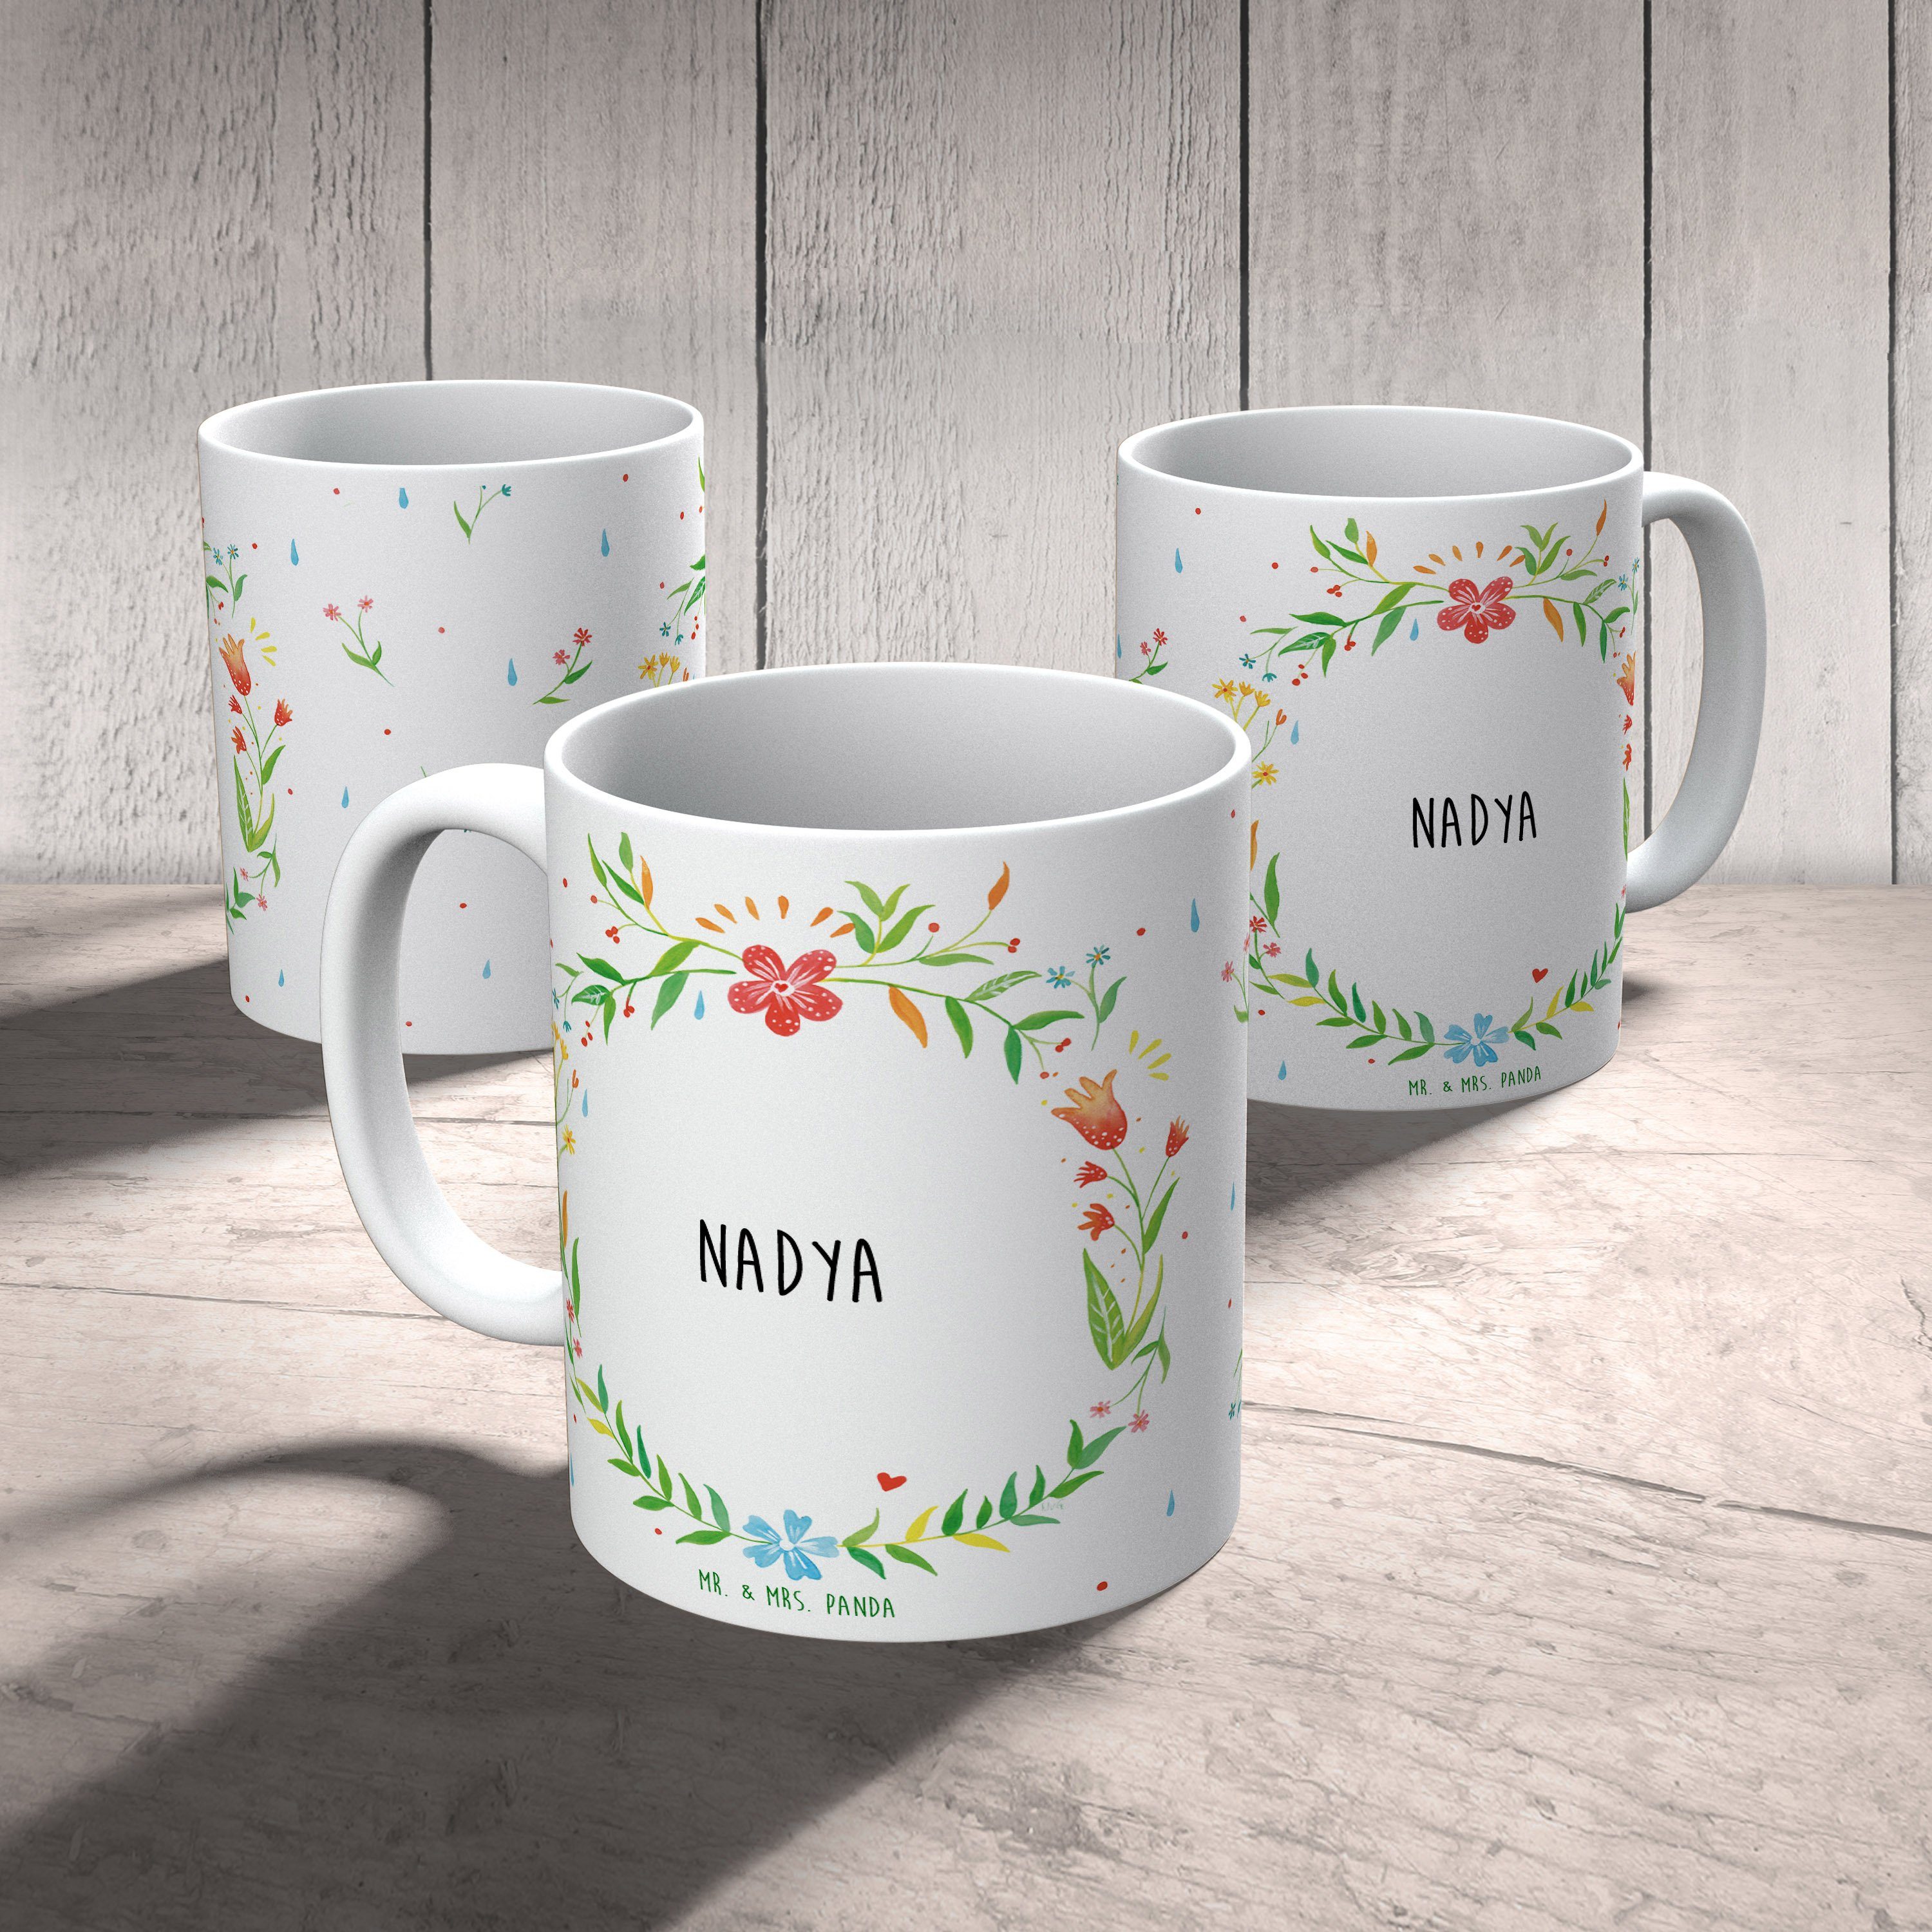 Keramik & Teebecher, Geschenk Geschenk, Tasse, Kaffeetasse, Panda Tasse Nadya - Mrs. Tasse, Büro Mr.